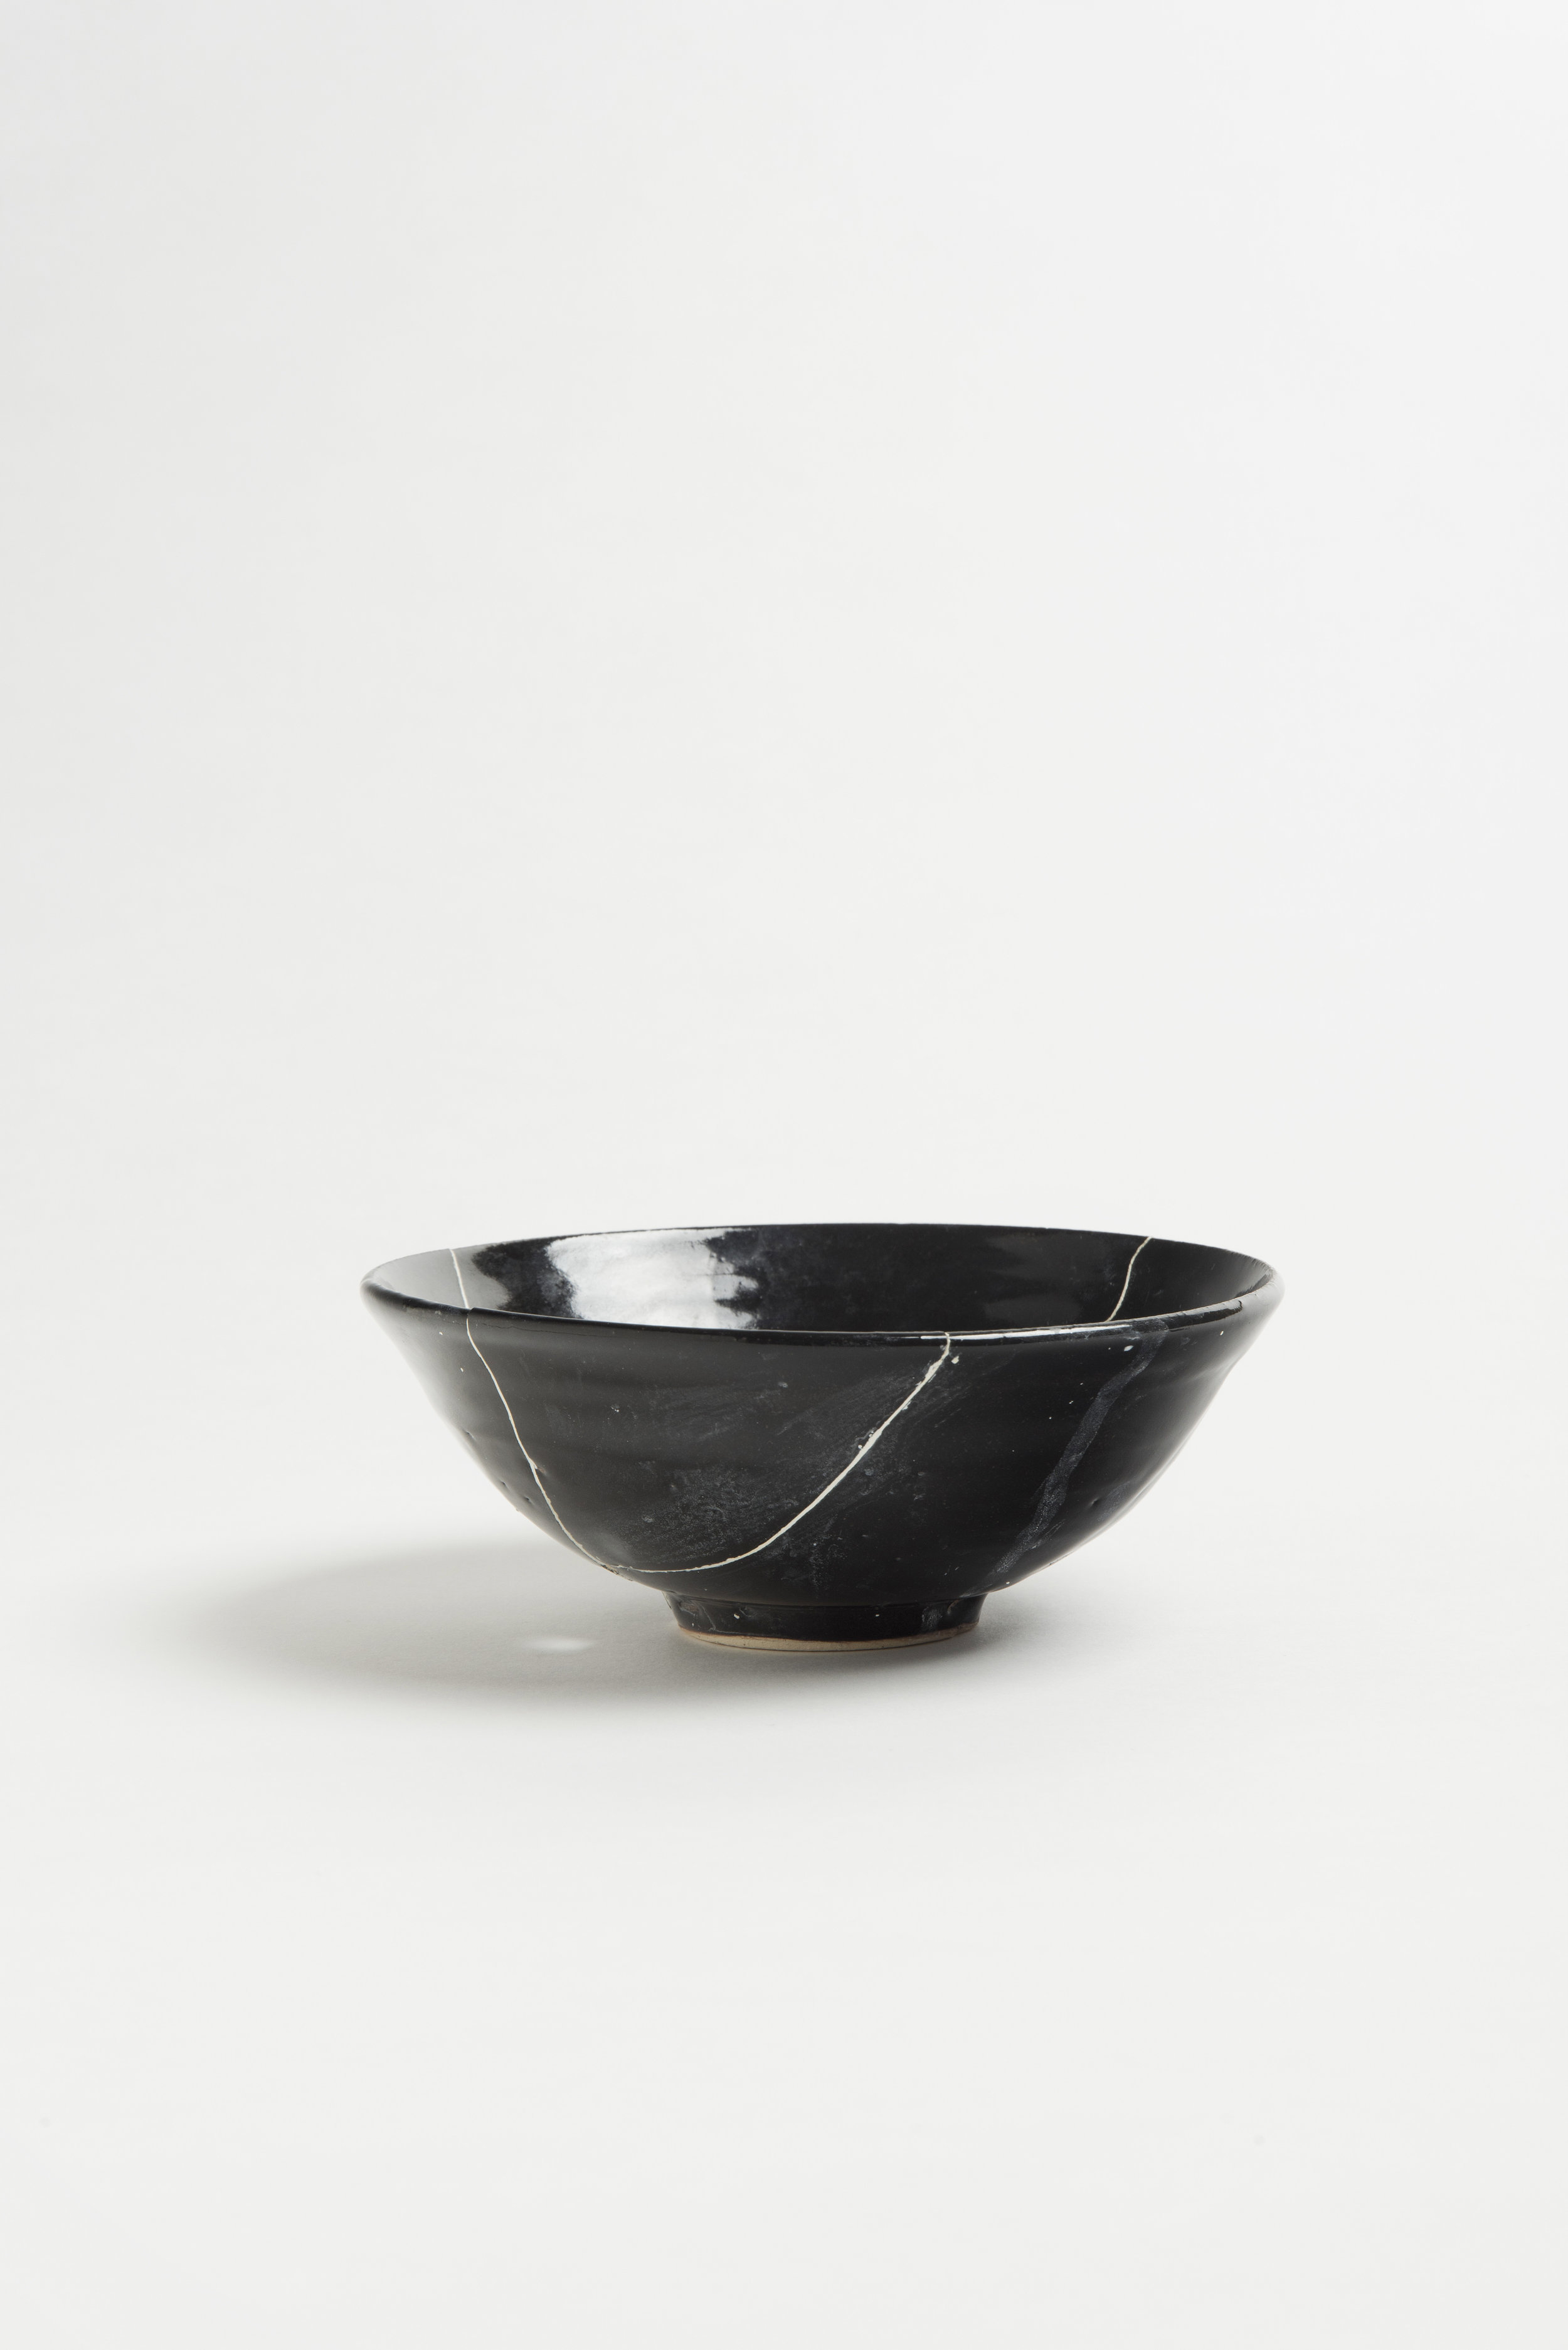 black-fracture-series-bowl-romy-northover-ceramics-the-garnered-60.jpg